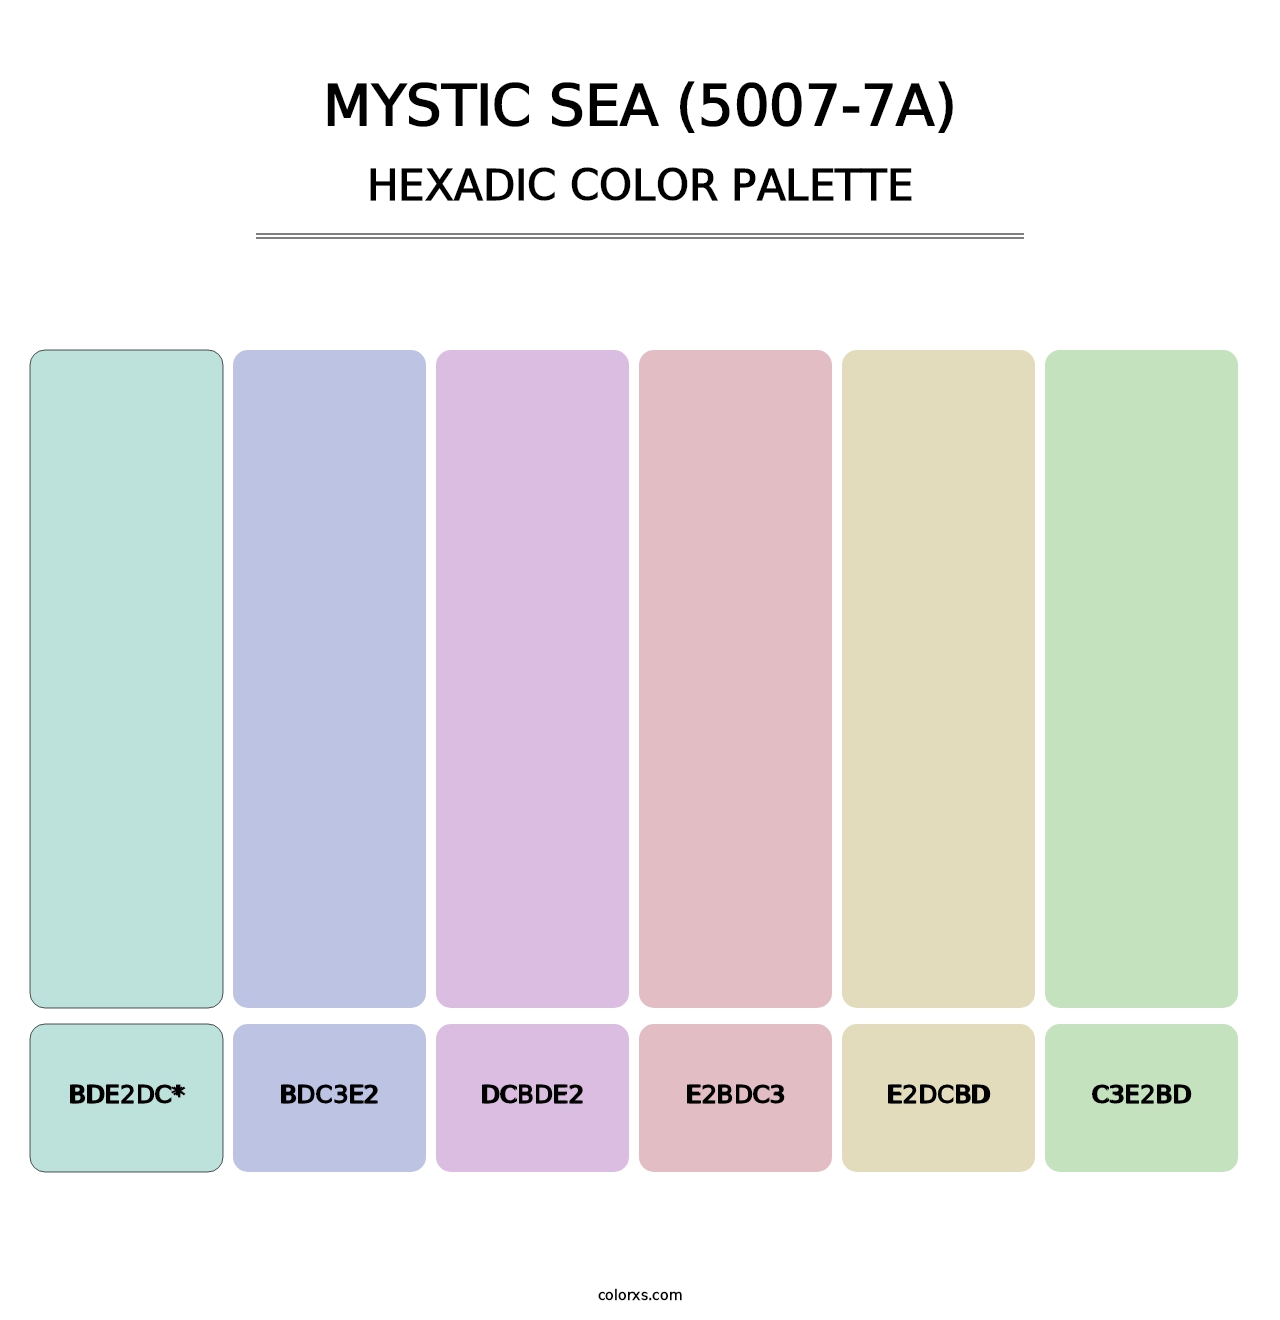 Mystic Sea (5007-7A) - Hexadic Color Palette